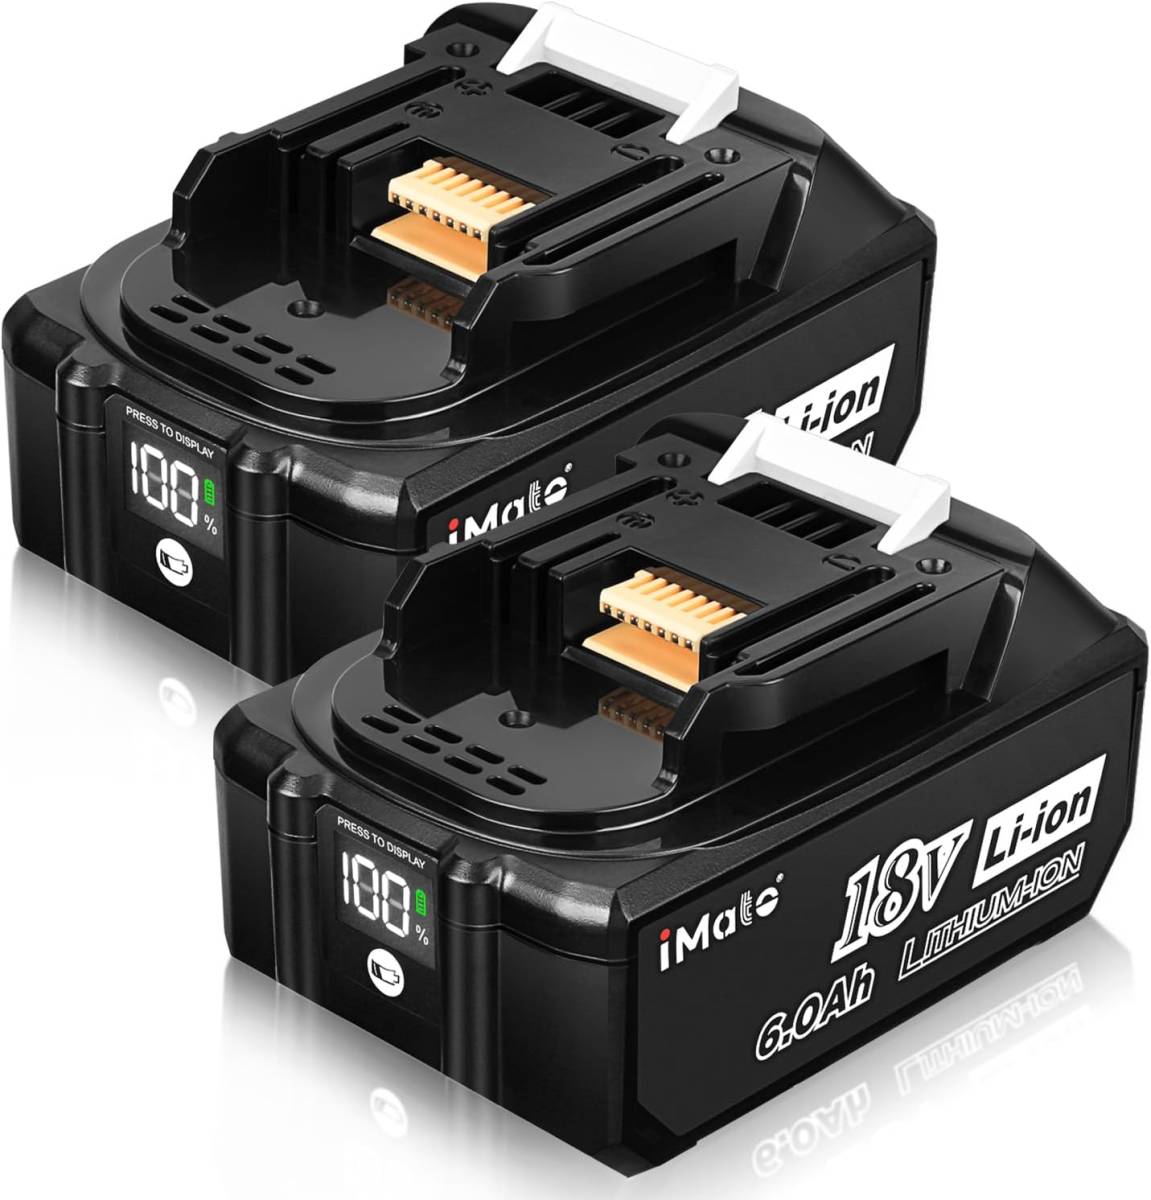 IMATO マキタ .18V バッテリー BL1860B 6.0Ah ％デジタル残量表示 電動工具リチウムイオンバッテリー BL1830 PSE認証済品 2個セット